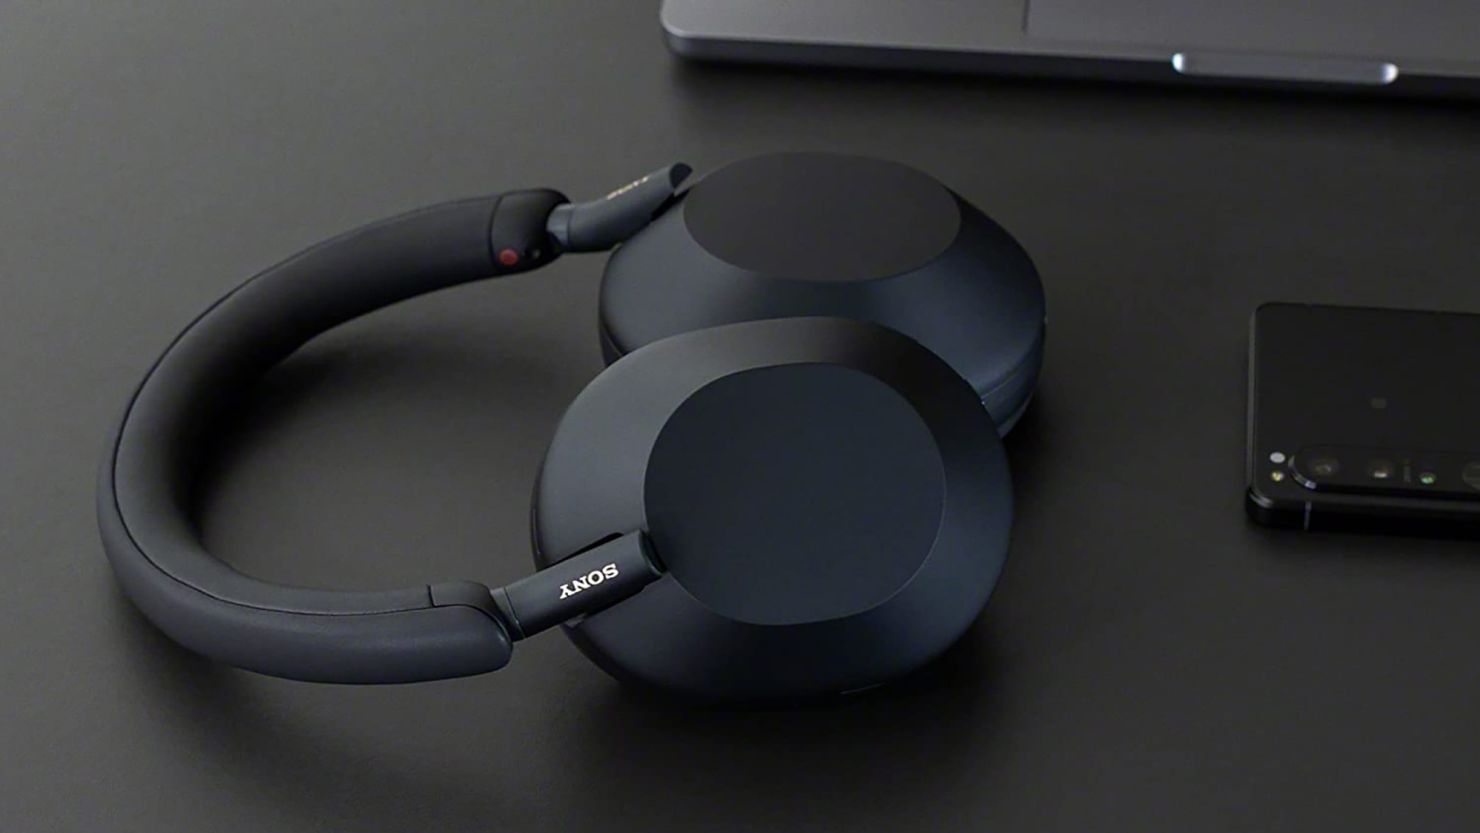 Sony Wireless Noise Canceling Over-the-Ear Headphones